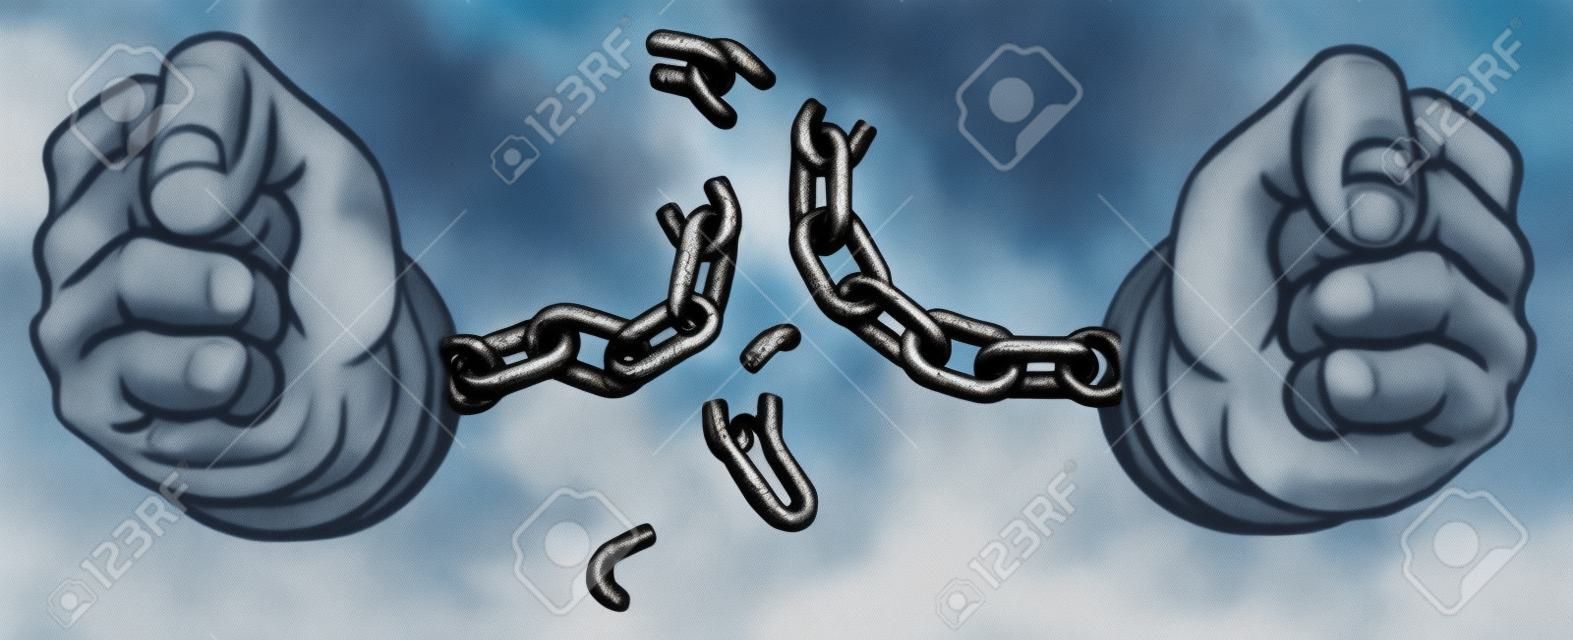 Mãos Quebrando Chain Shackles Cuffs Freedom Design